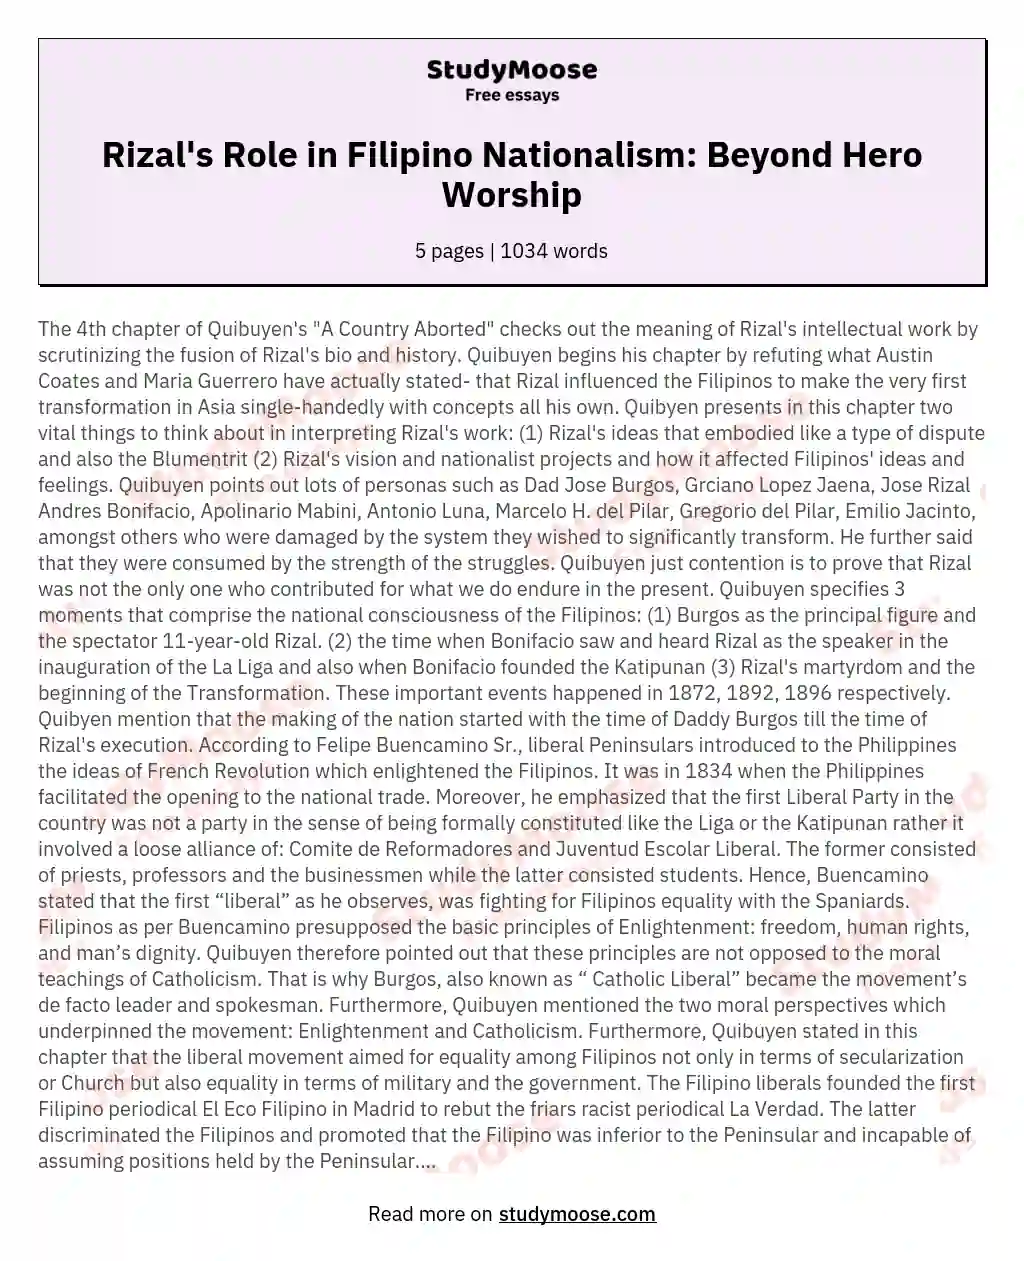 Rizal's Role in Filipino Nationalism: Beyond Hero Worship essay